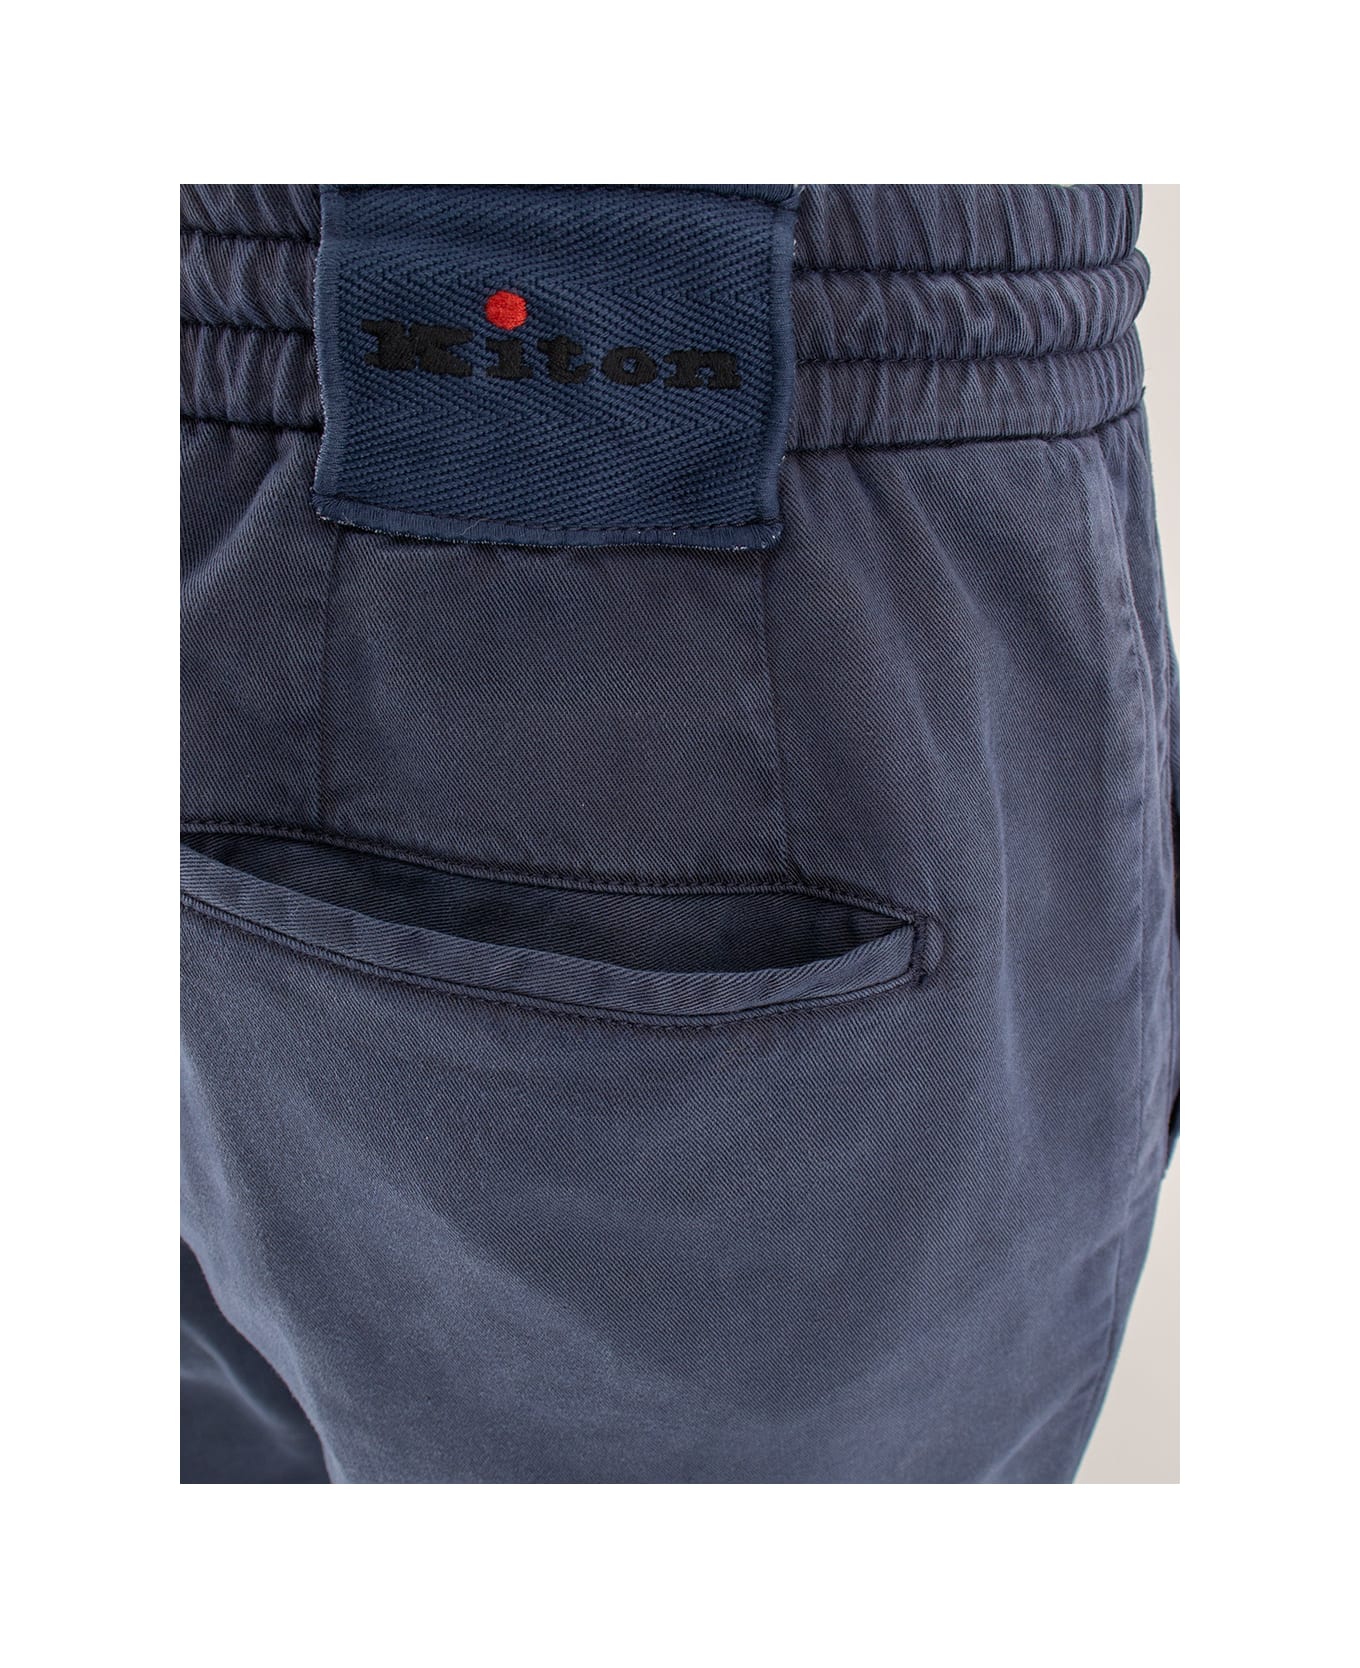 Kiton Trousers - NAVY BLUE ボトムス